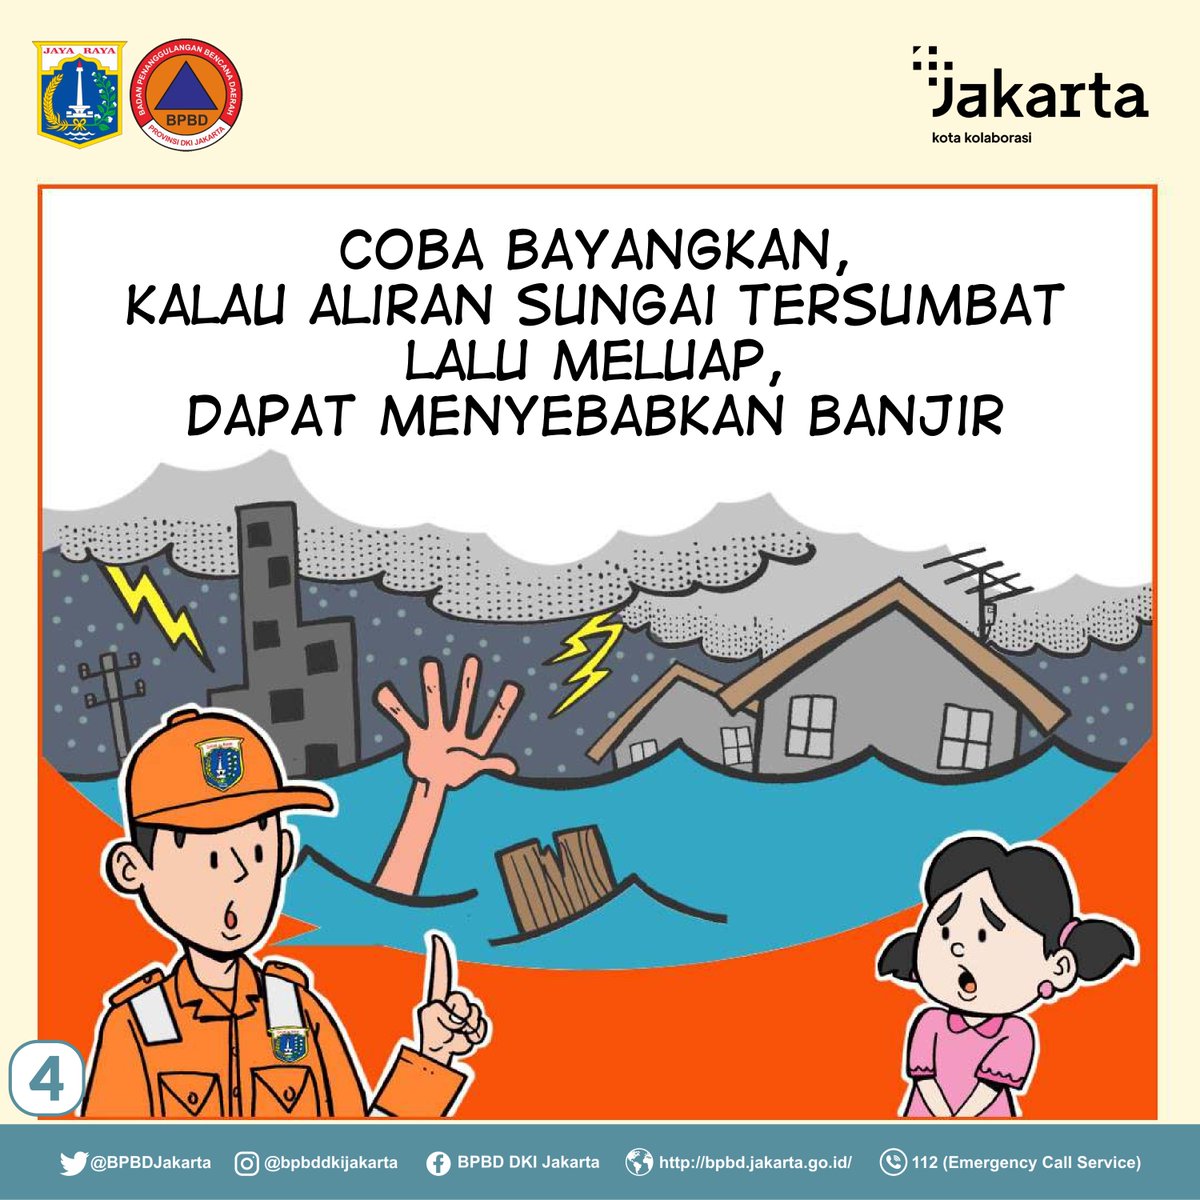 Komik: Jakarta Benahi Sampah. Pasti bisa

#HariPeduliSampah #SiapTanggapGalang #JagaJakarta #EdukasiBPBDJKT